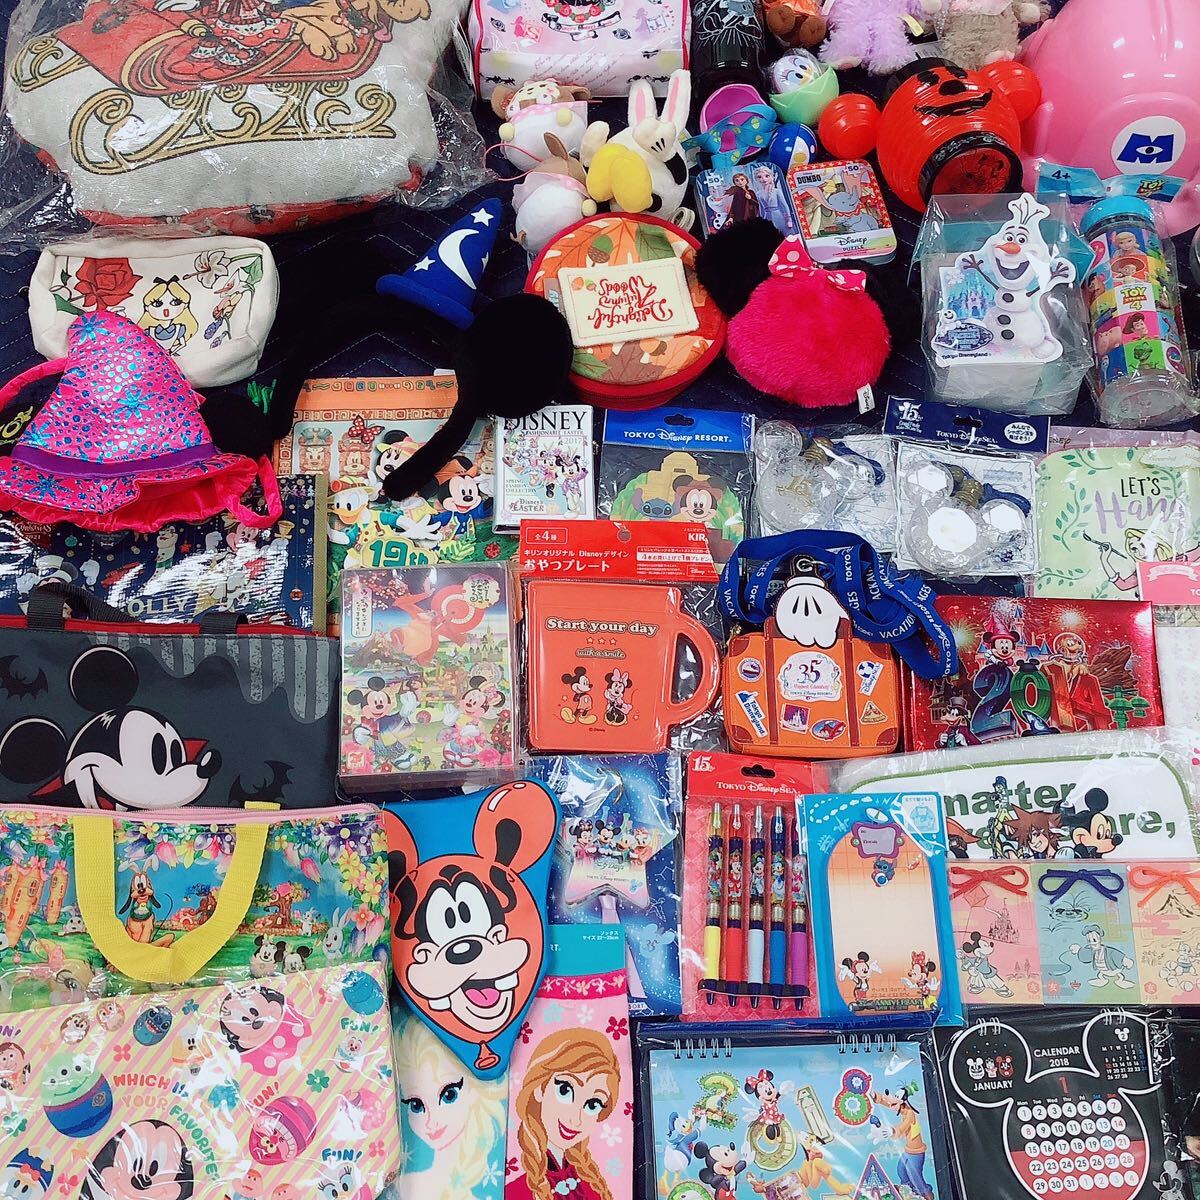 【K1】④大量 ディズニー グッズセット まとめ売り 玩具 バッグ ポーチ 文房具 パズルクッション リュック パスケース Disney ダッフィー